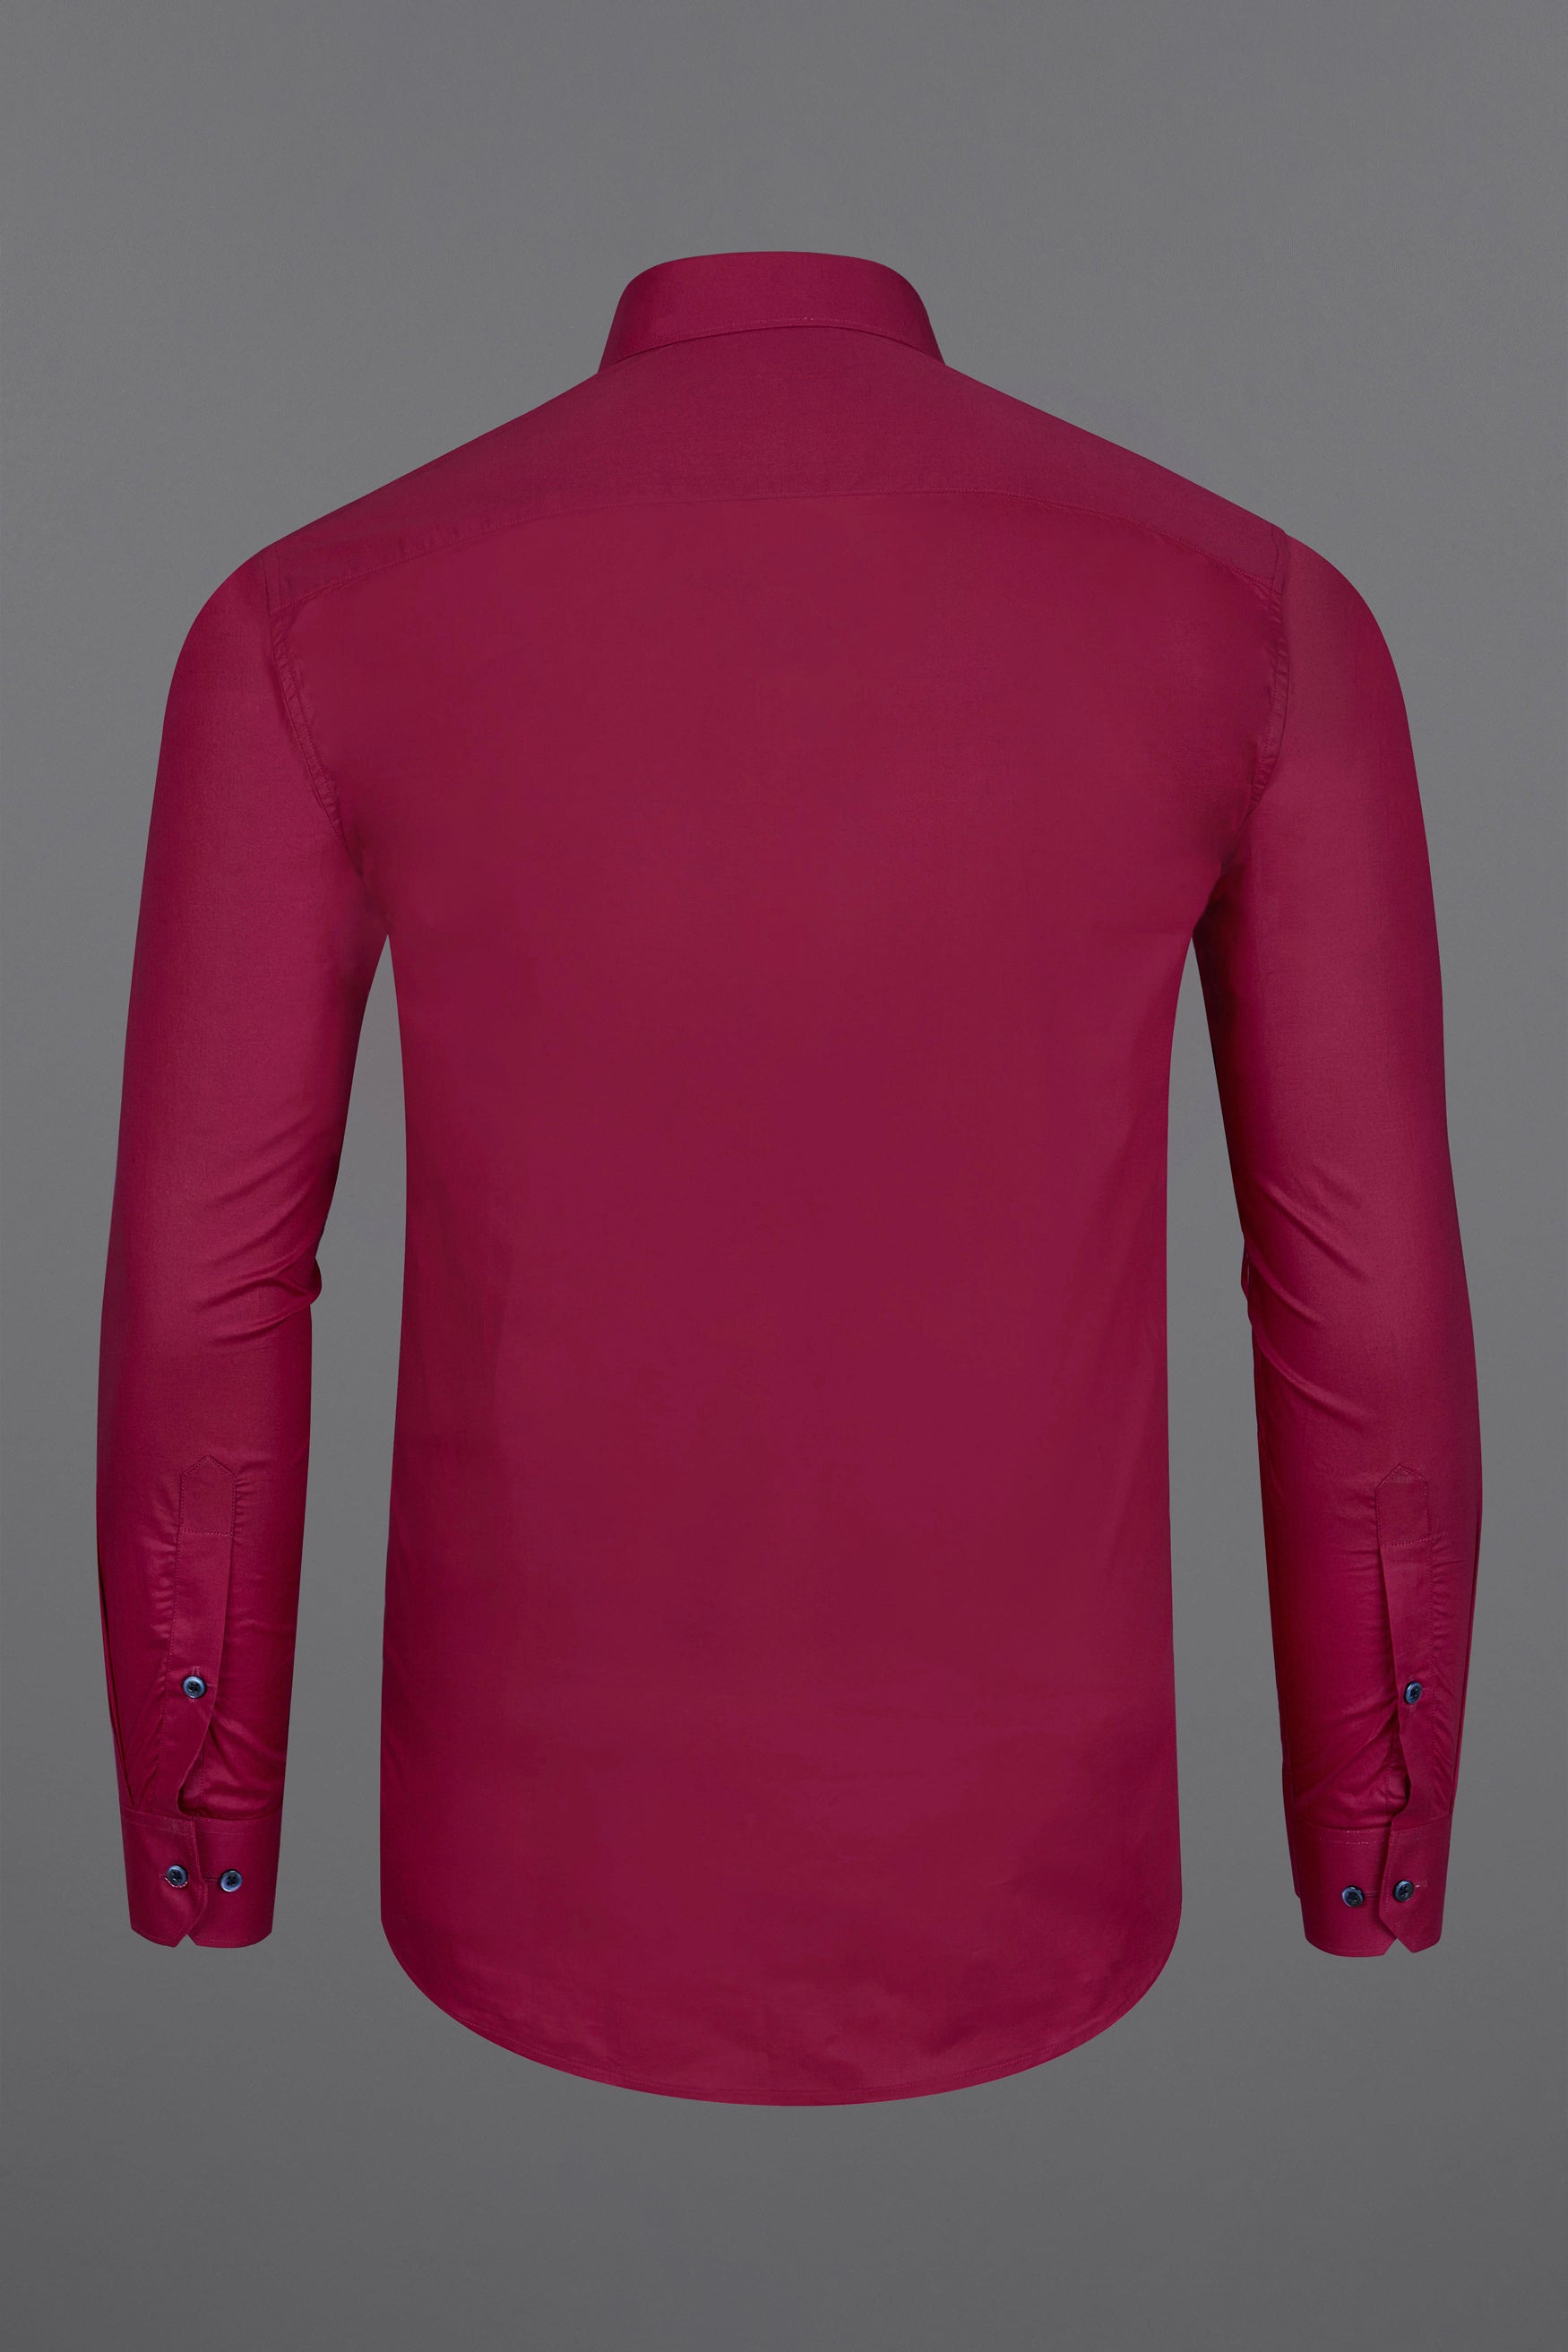 Merlot Red with Lion Hand Painted Super Soft Premium Cotton Shirt